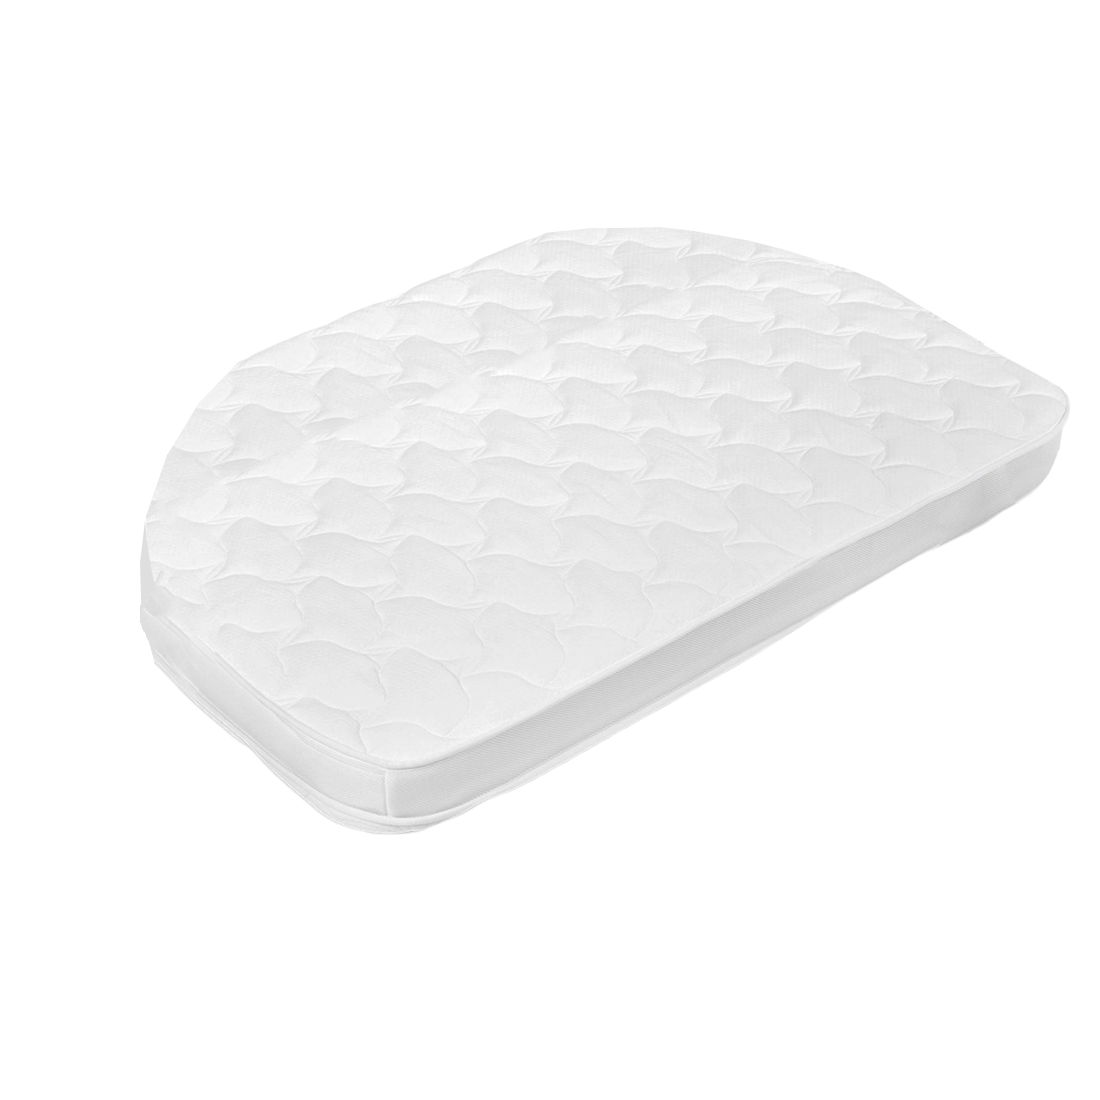 Матрас INCANTO для приставной кровати Leeloo (холкон/кокос) матрас баюшка холкон кокос 120x60x10 см